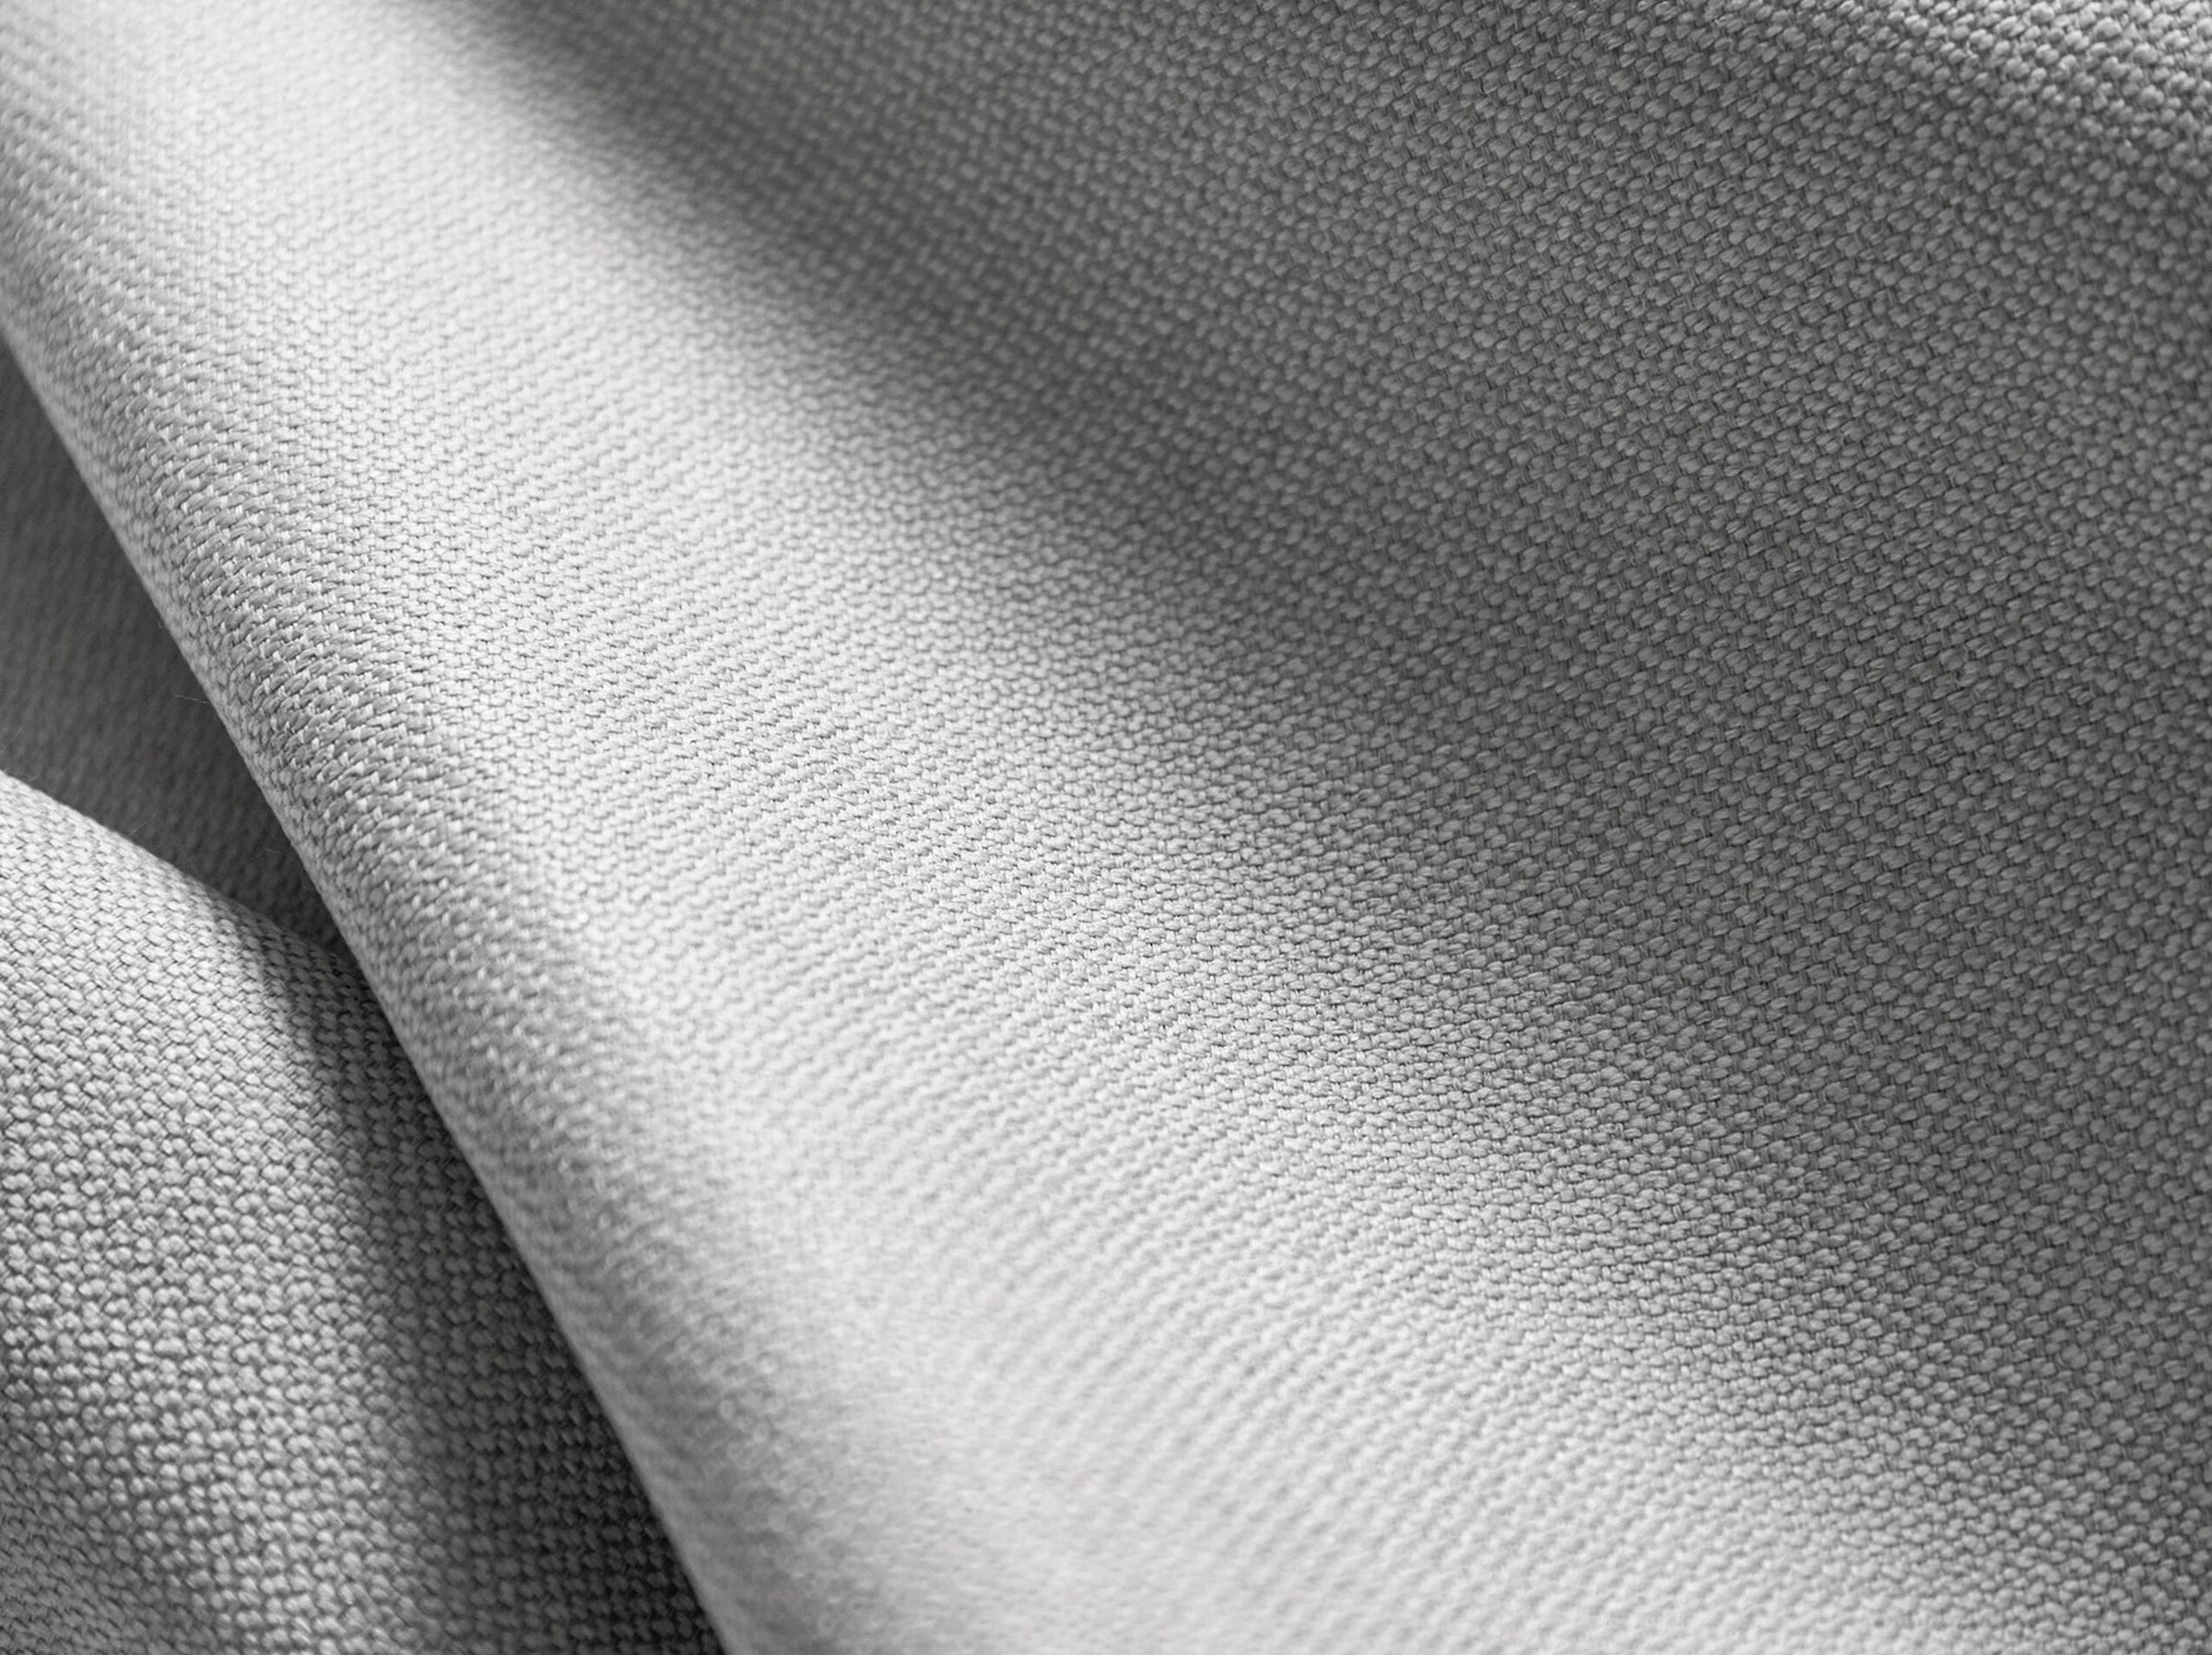 Jodie sofás tessuto strutturato grigio chiaro